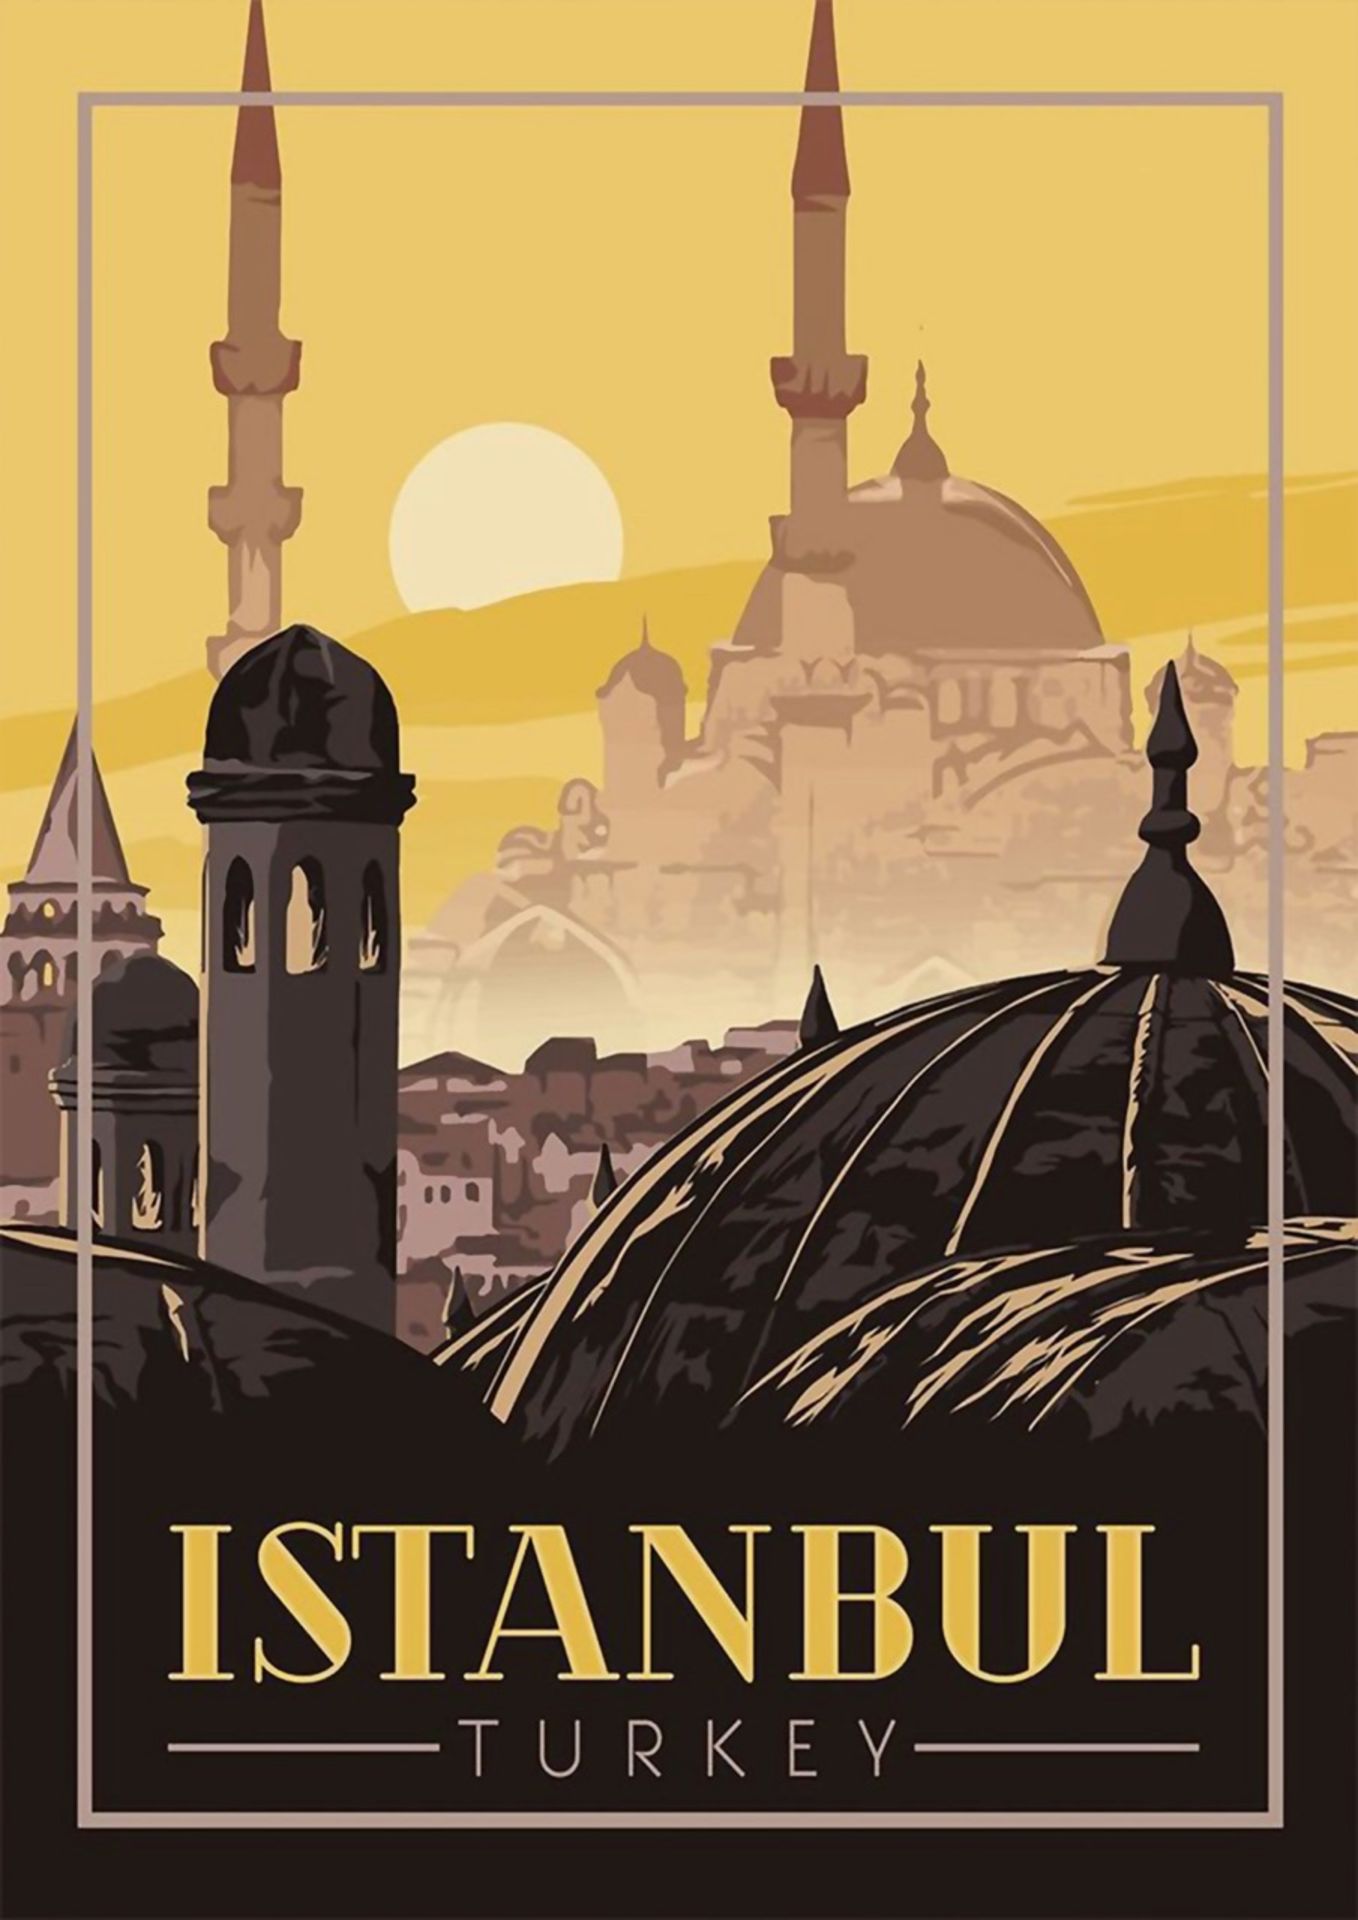 Istanbul, Turkey Travel Poster